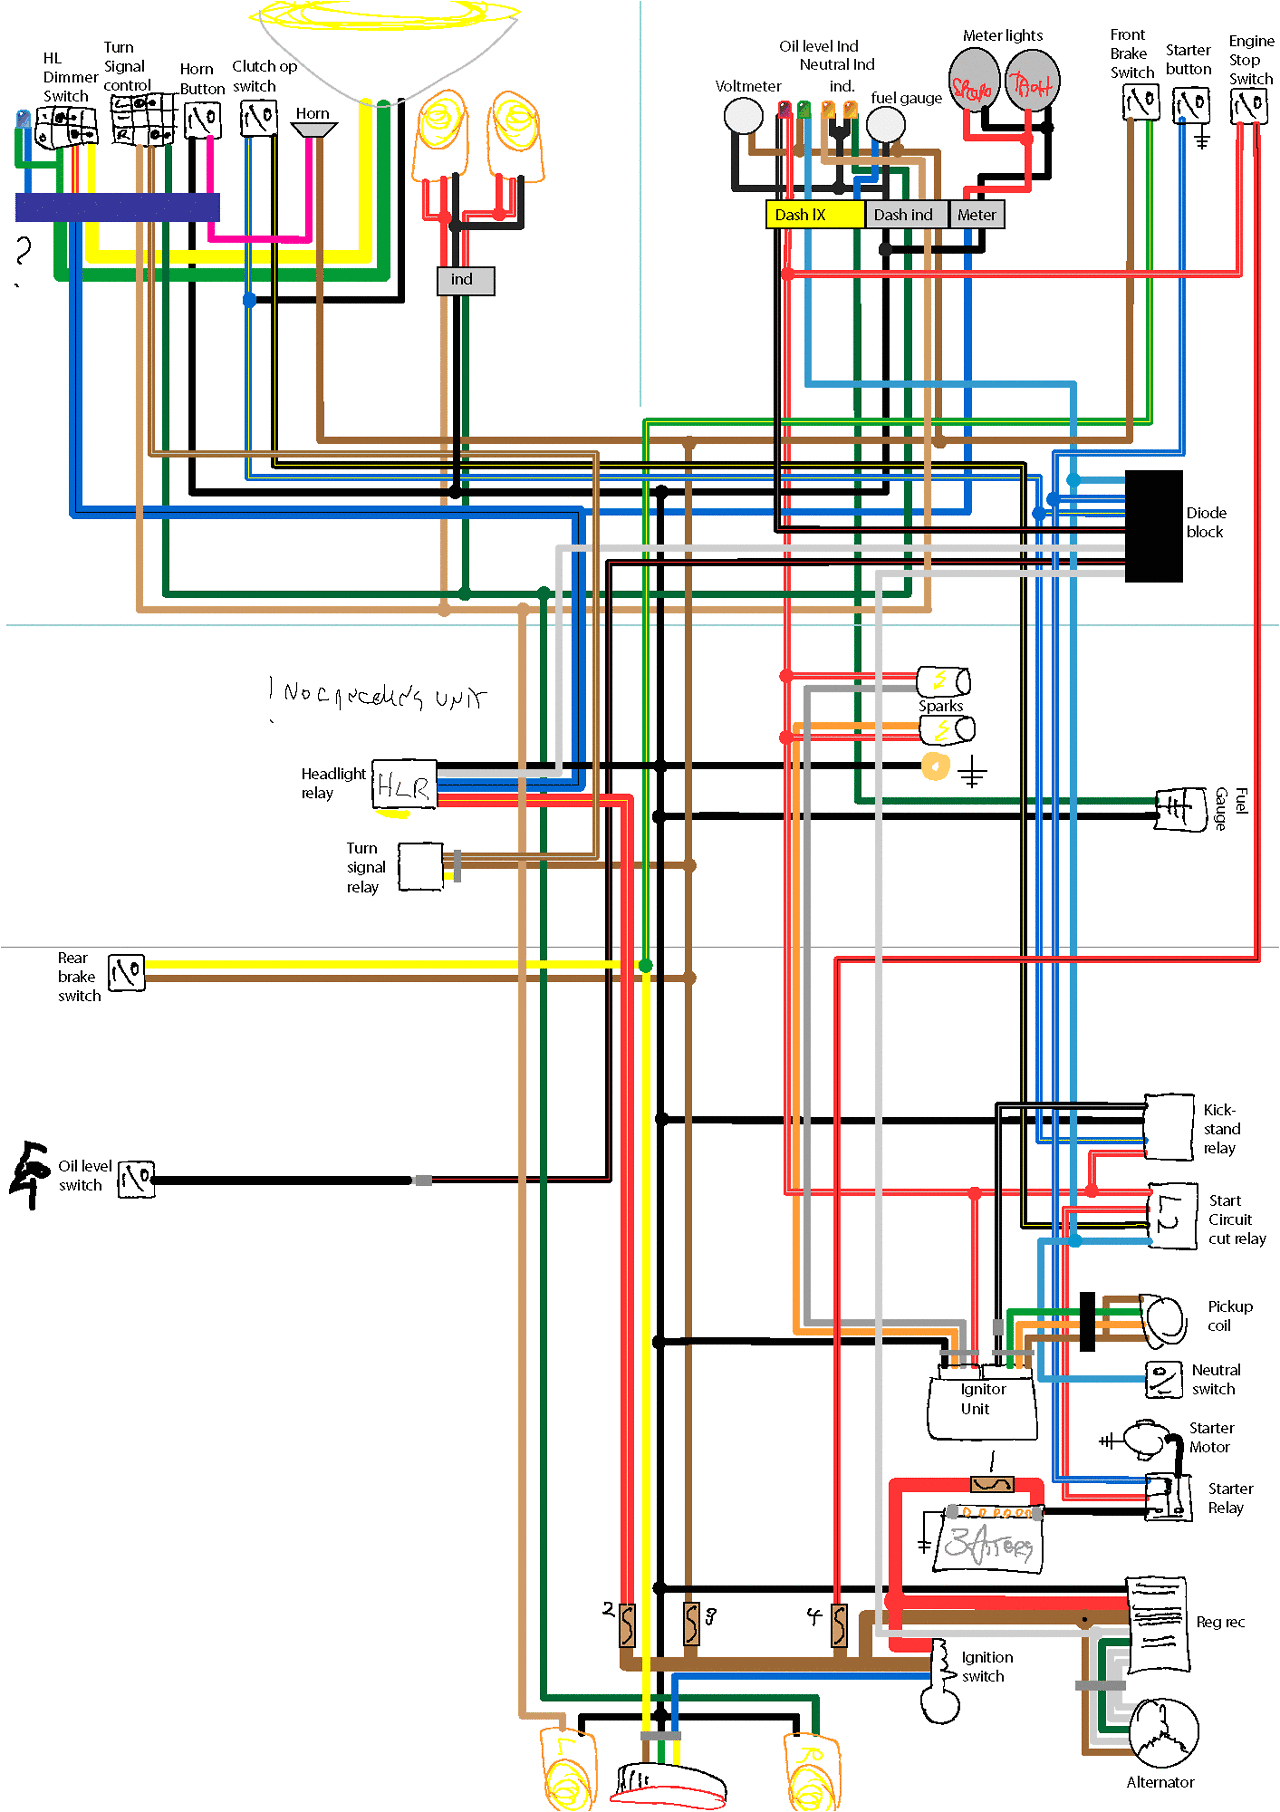 wiring diagram symbols for car wiring diagram diagram dodge wiring diagram symbols